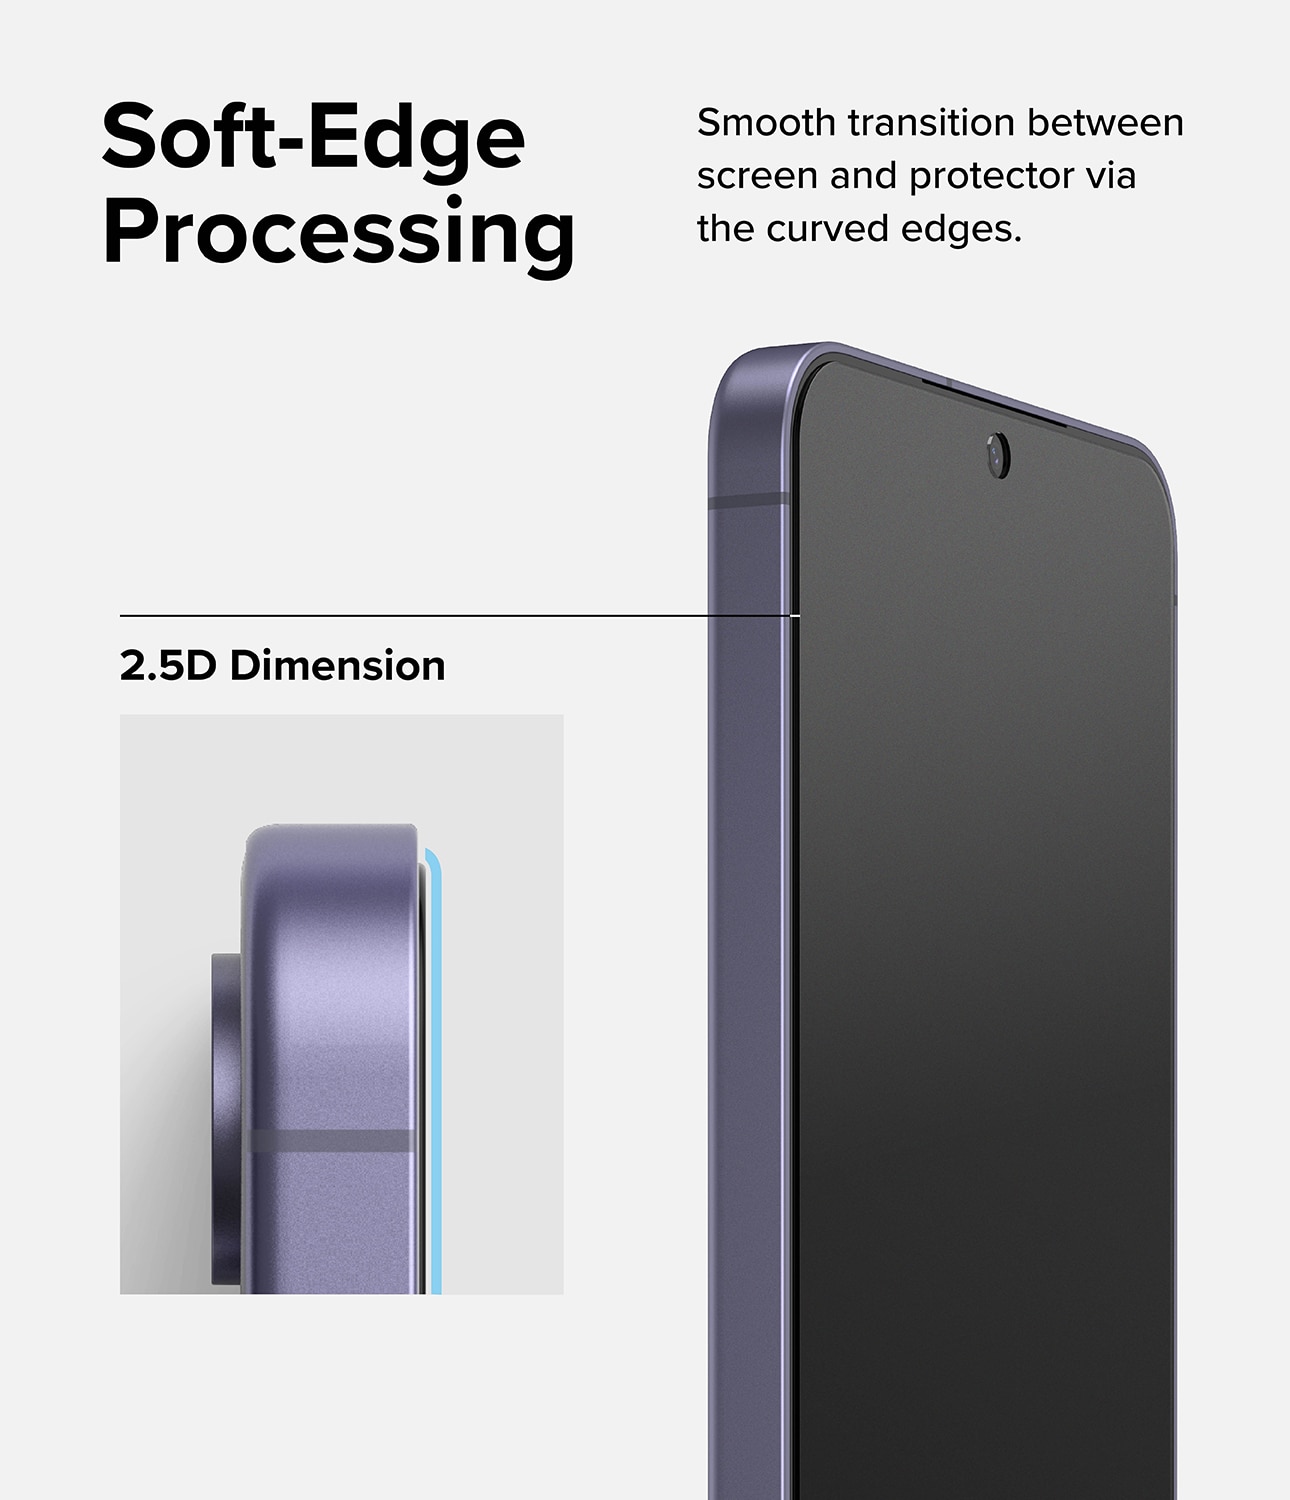 Easy Slide Glass (2 pièces) Samsung Galaxy S24 Plus